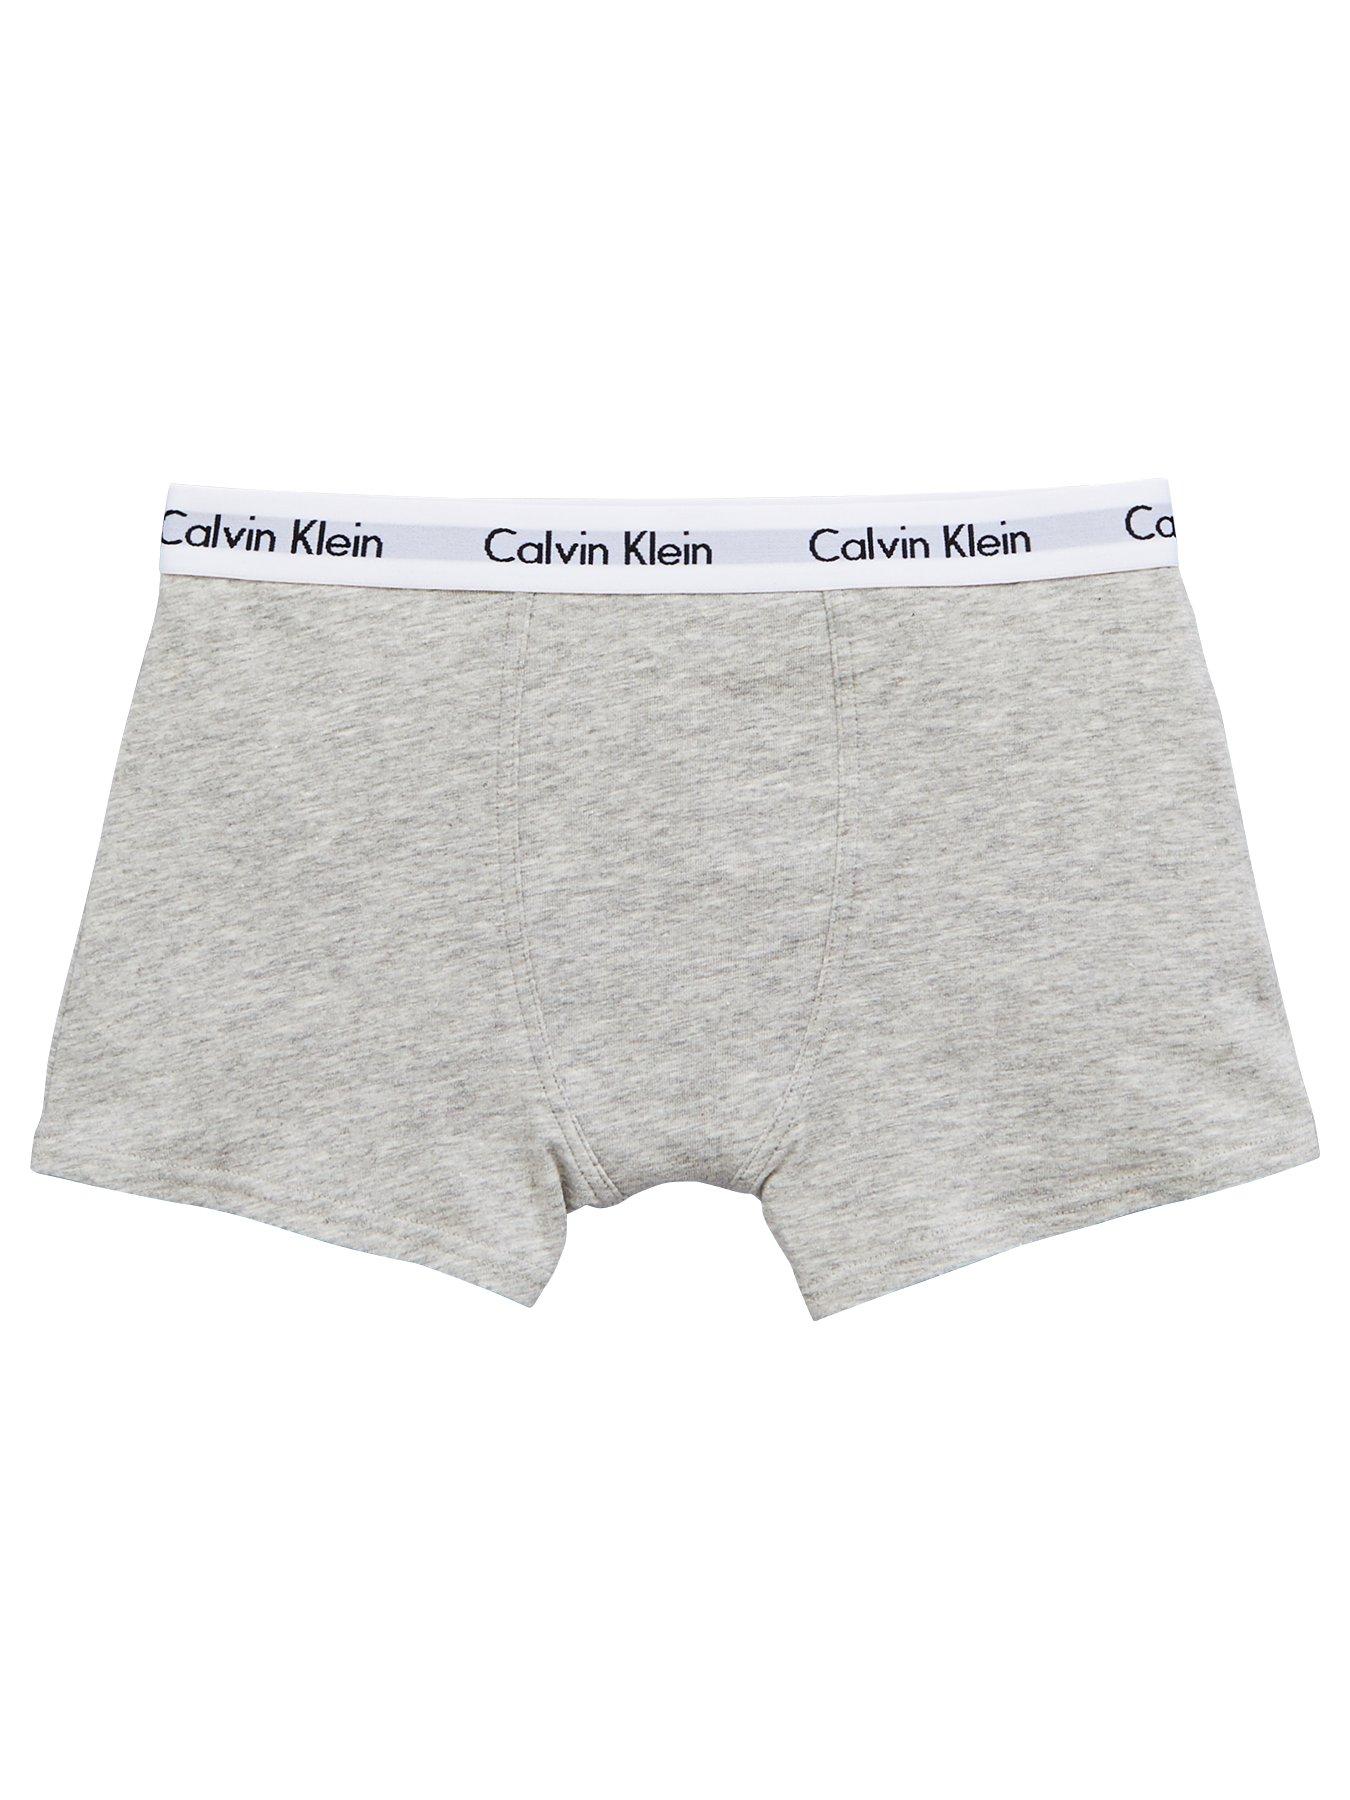 Calvin Klein Teen Boys Grey & Ivory Cotton Tops (2 pack)